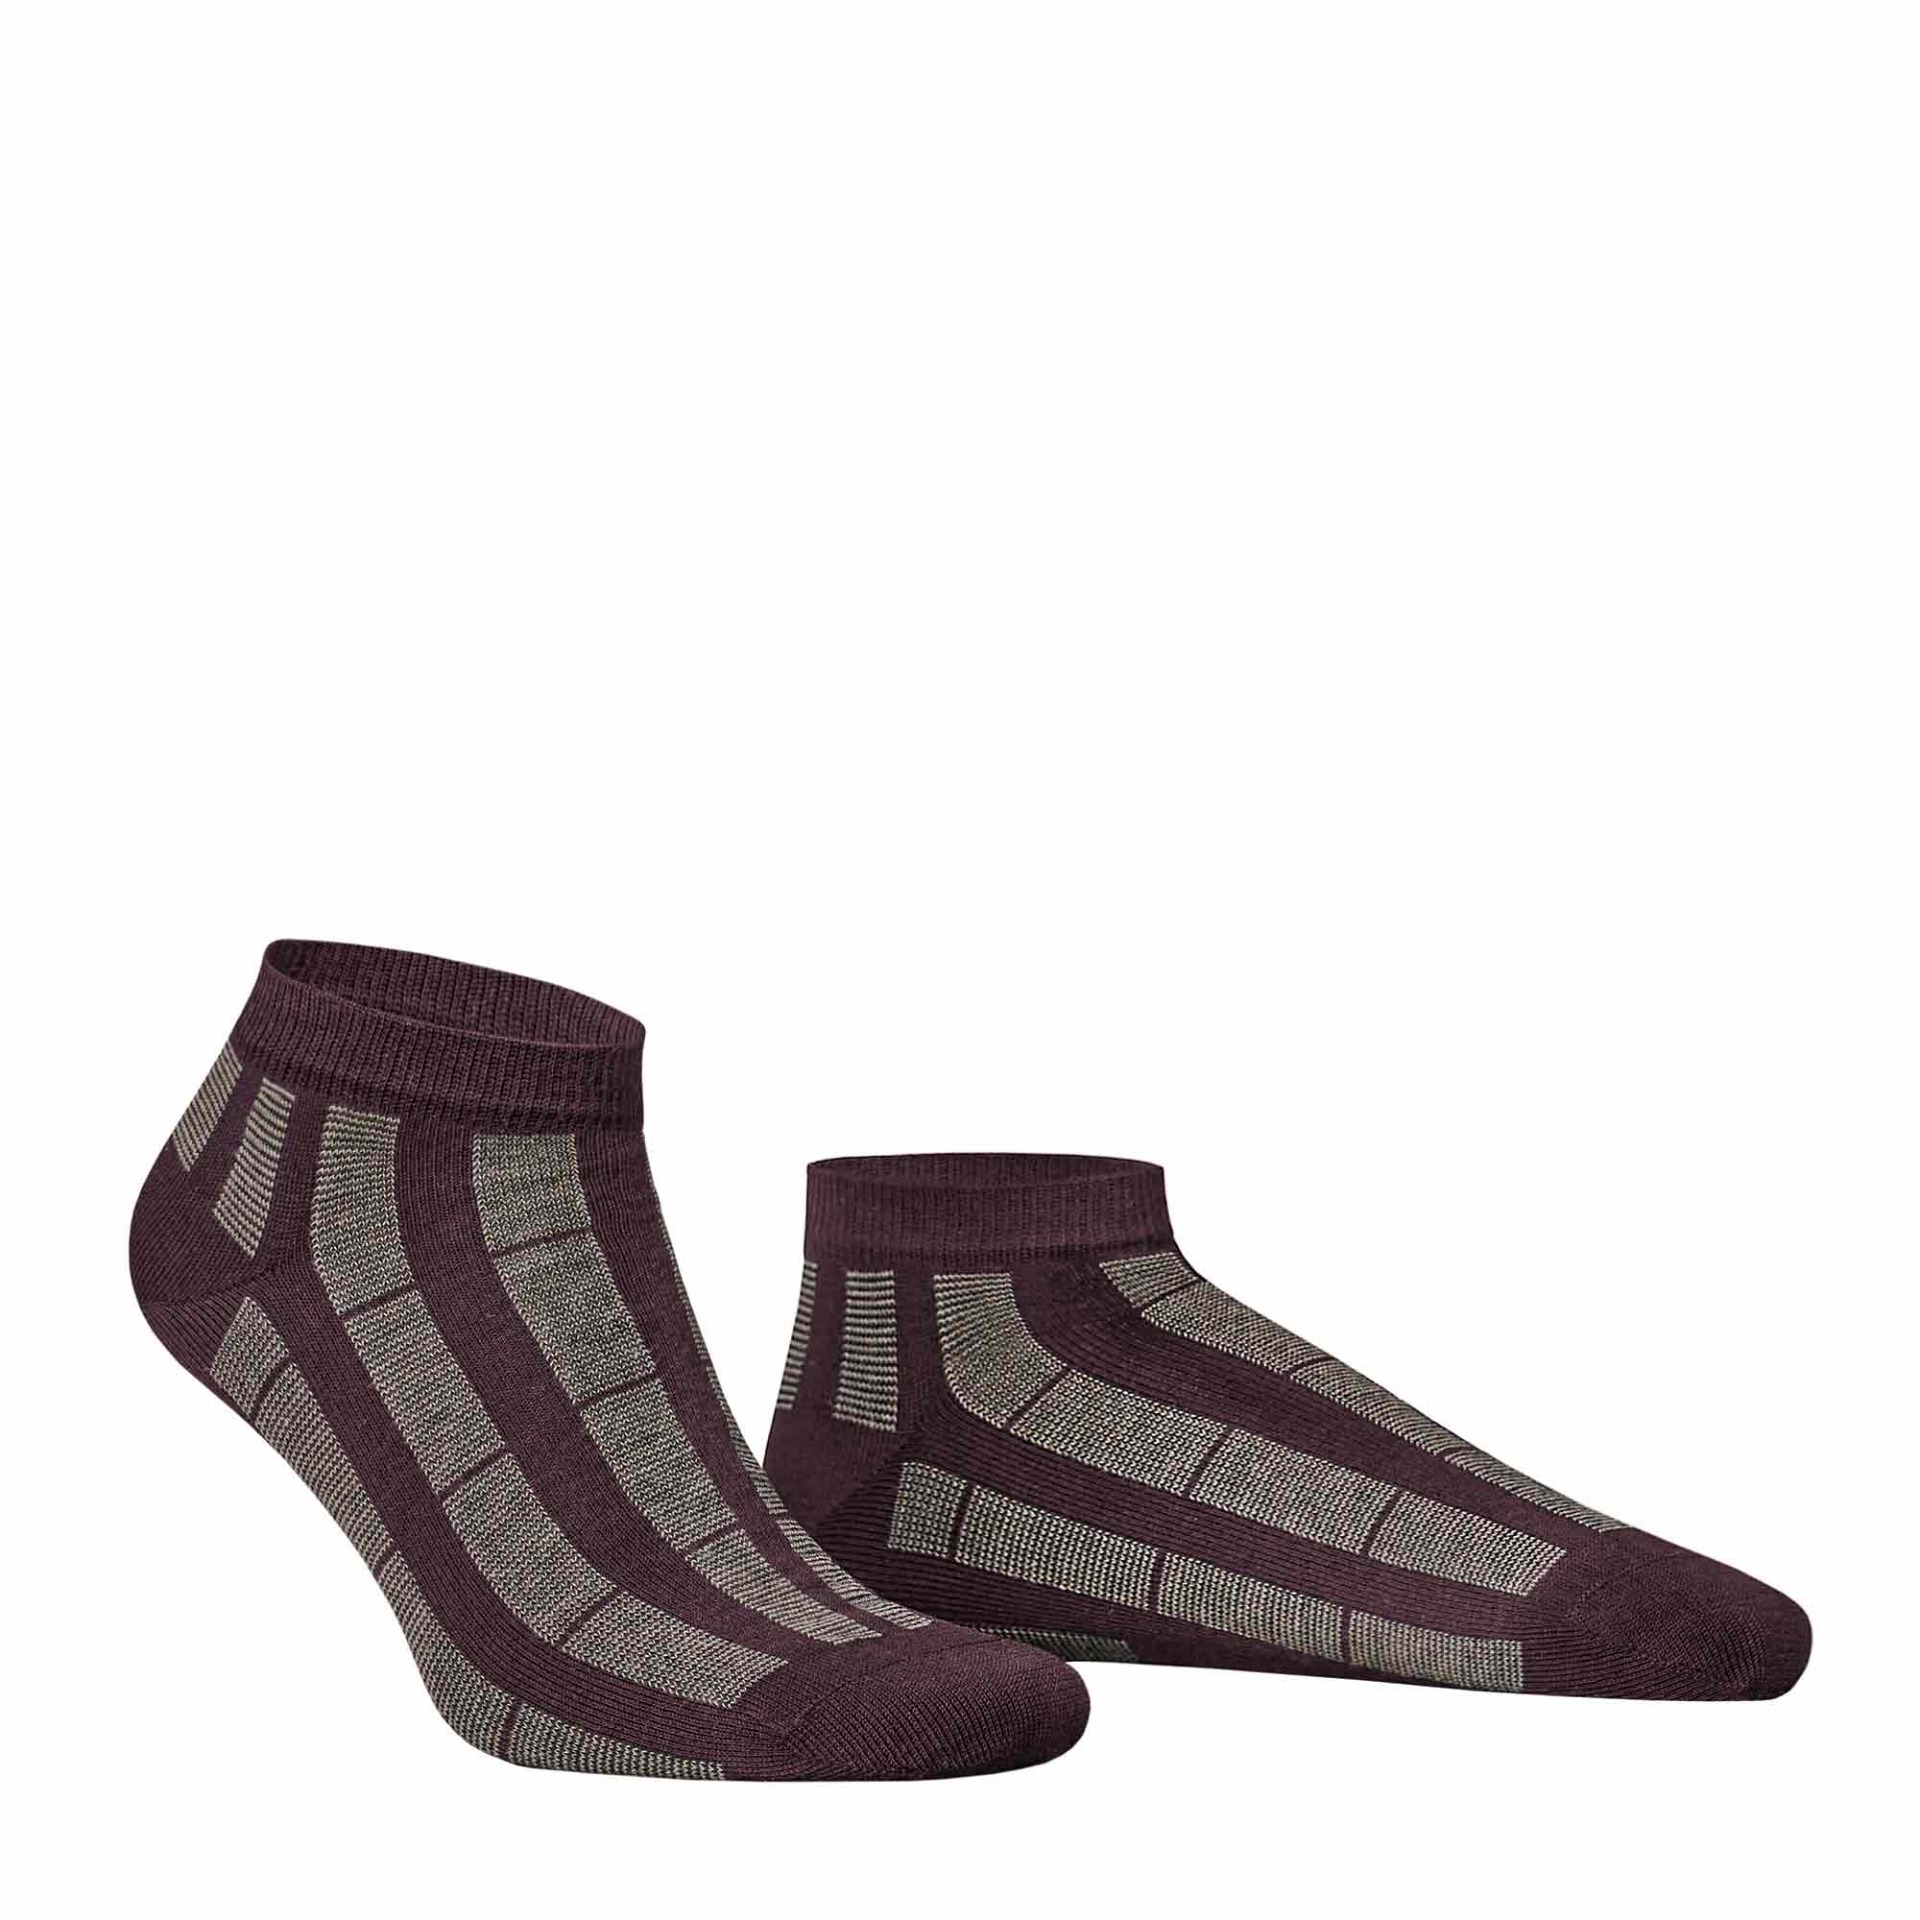 HUDSON Herren PIN -  43/46 - Sneaker Socken mit Streifen-Muster - Blackberry 0113 (Rot)